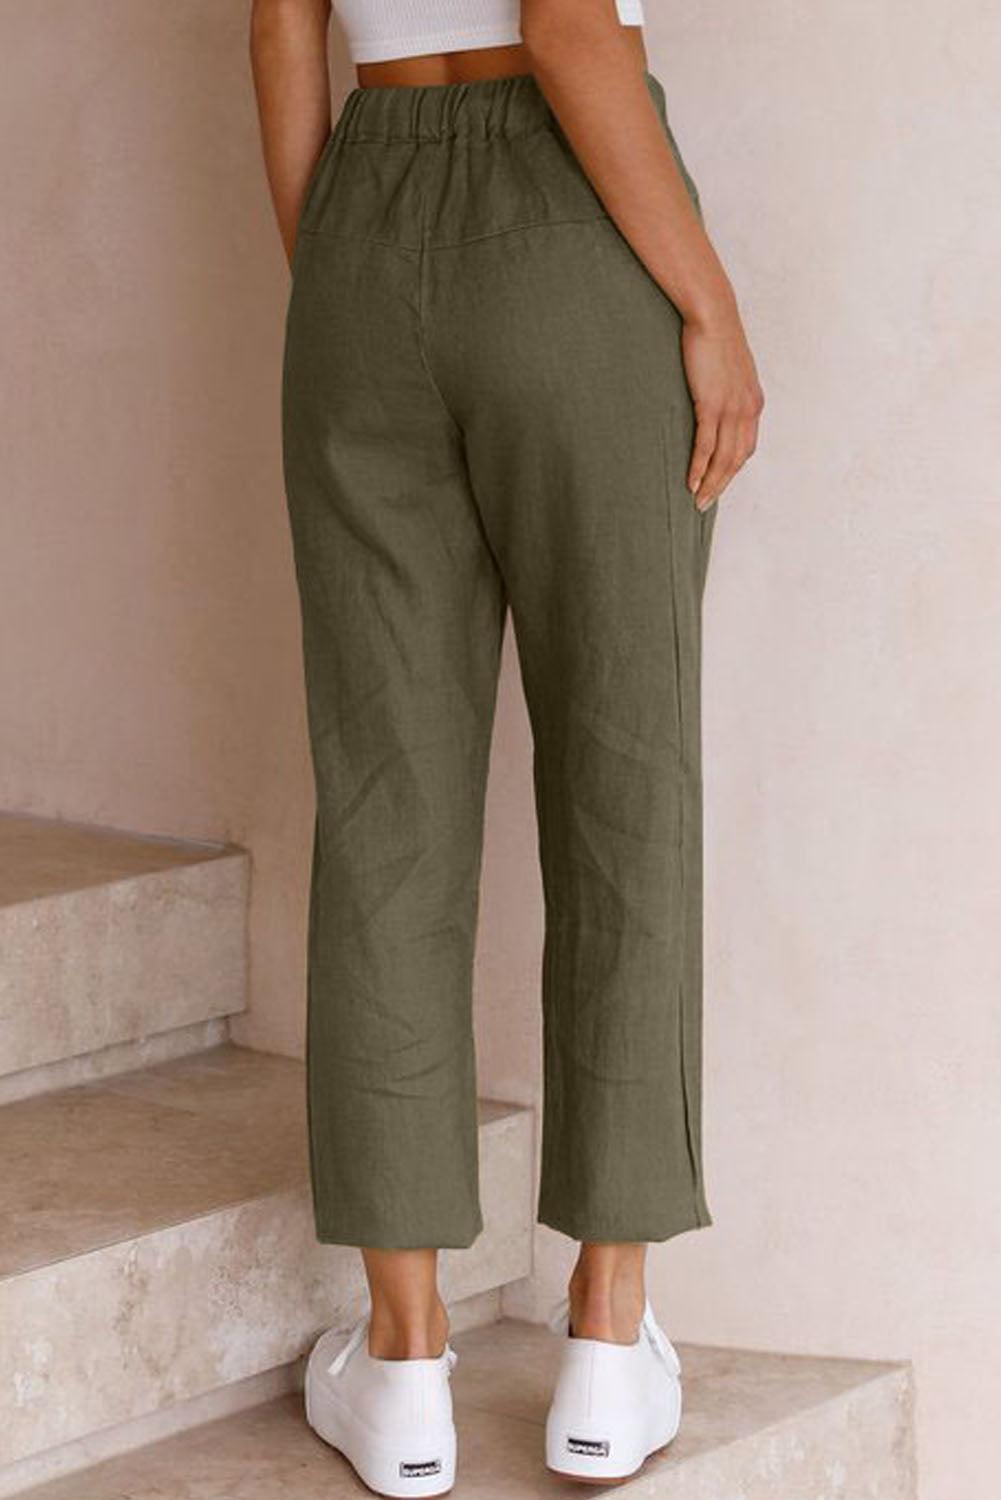 Solid Pocketed Drawstring High Waist Pants - L & M Kee, LLC